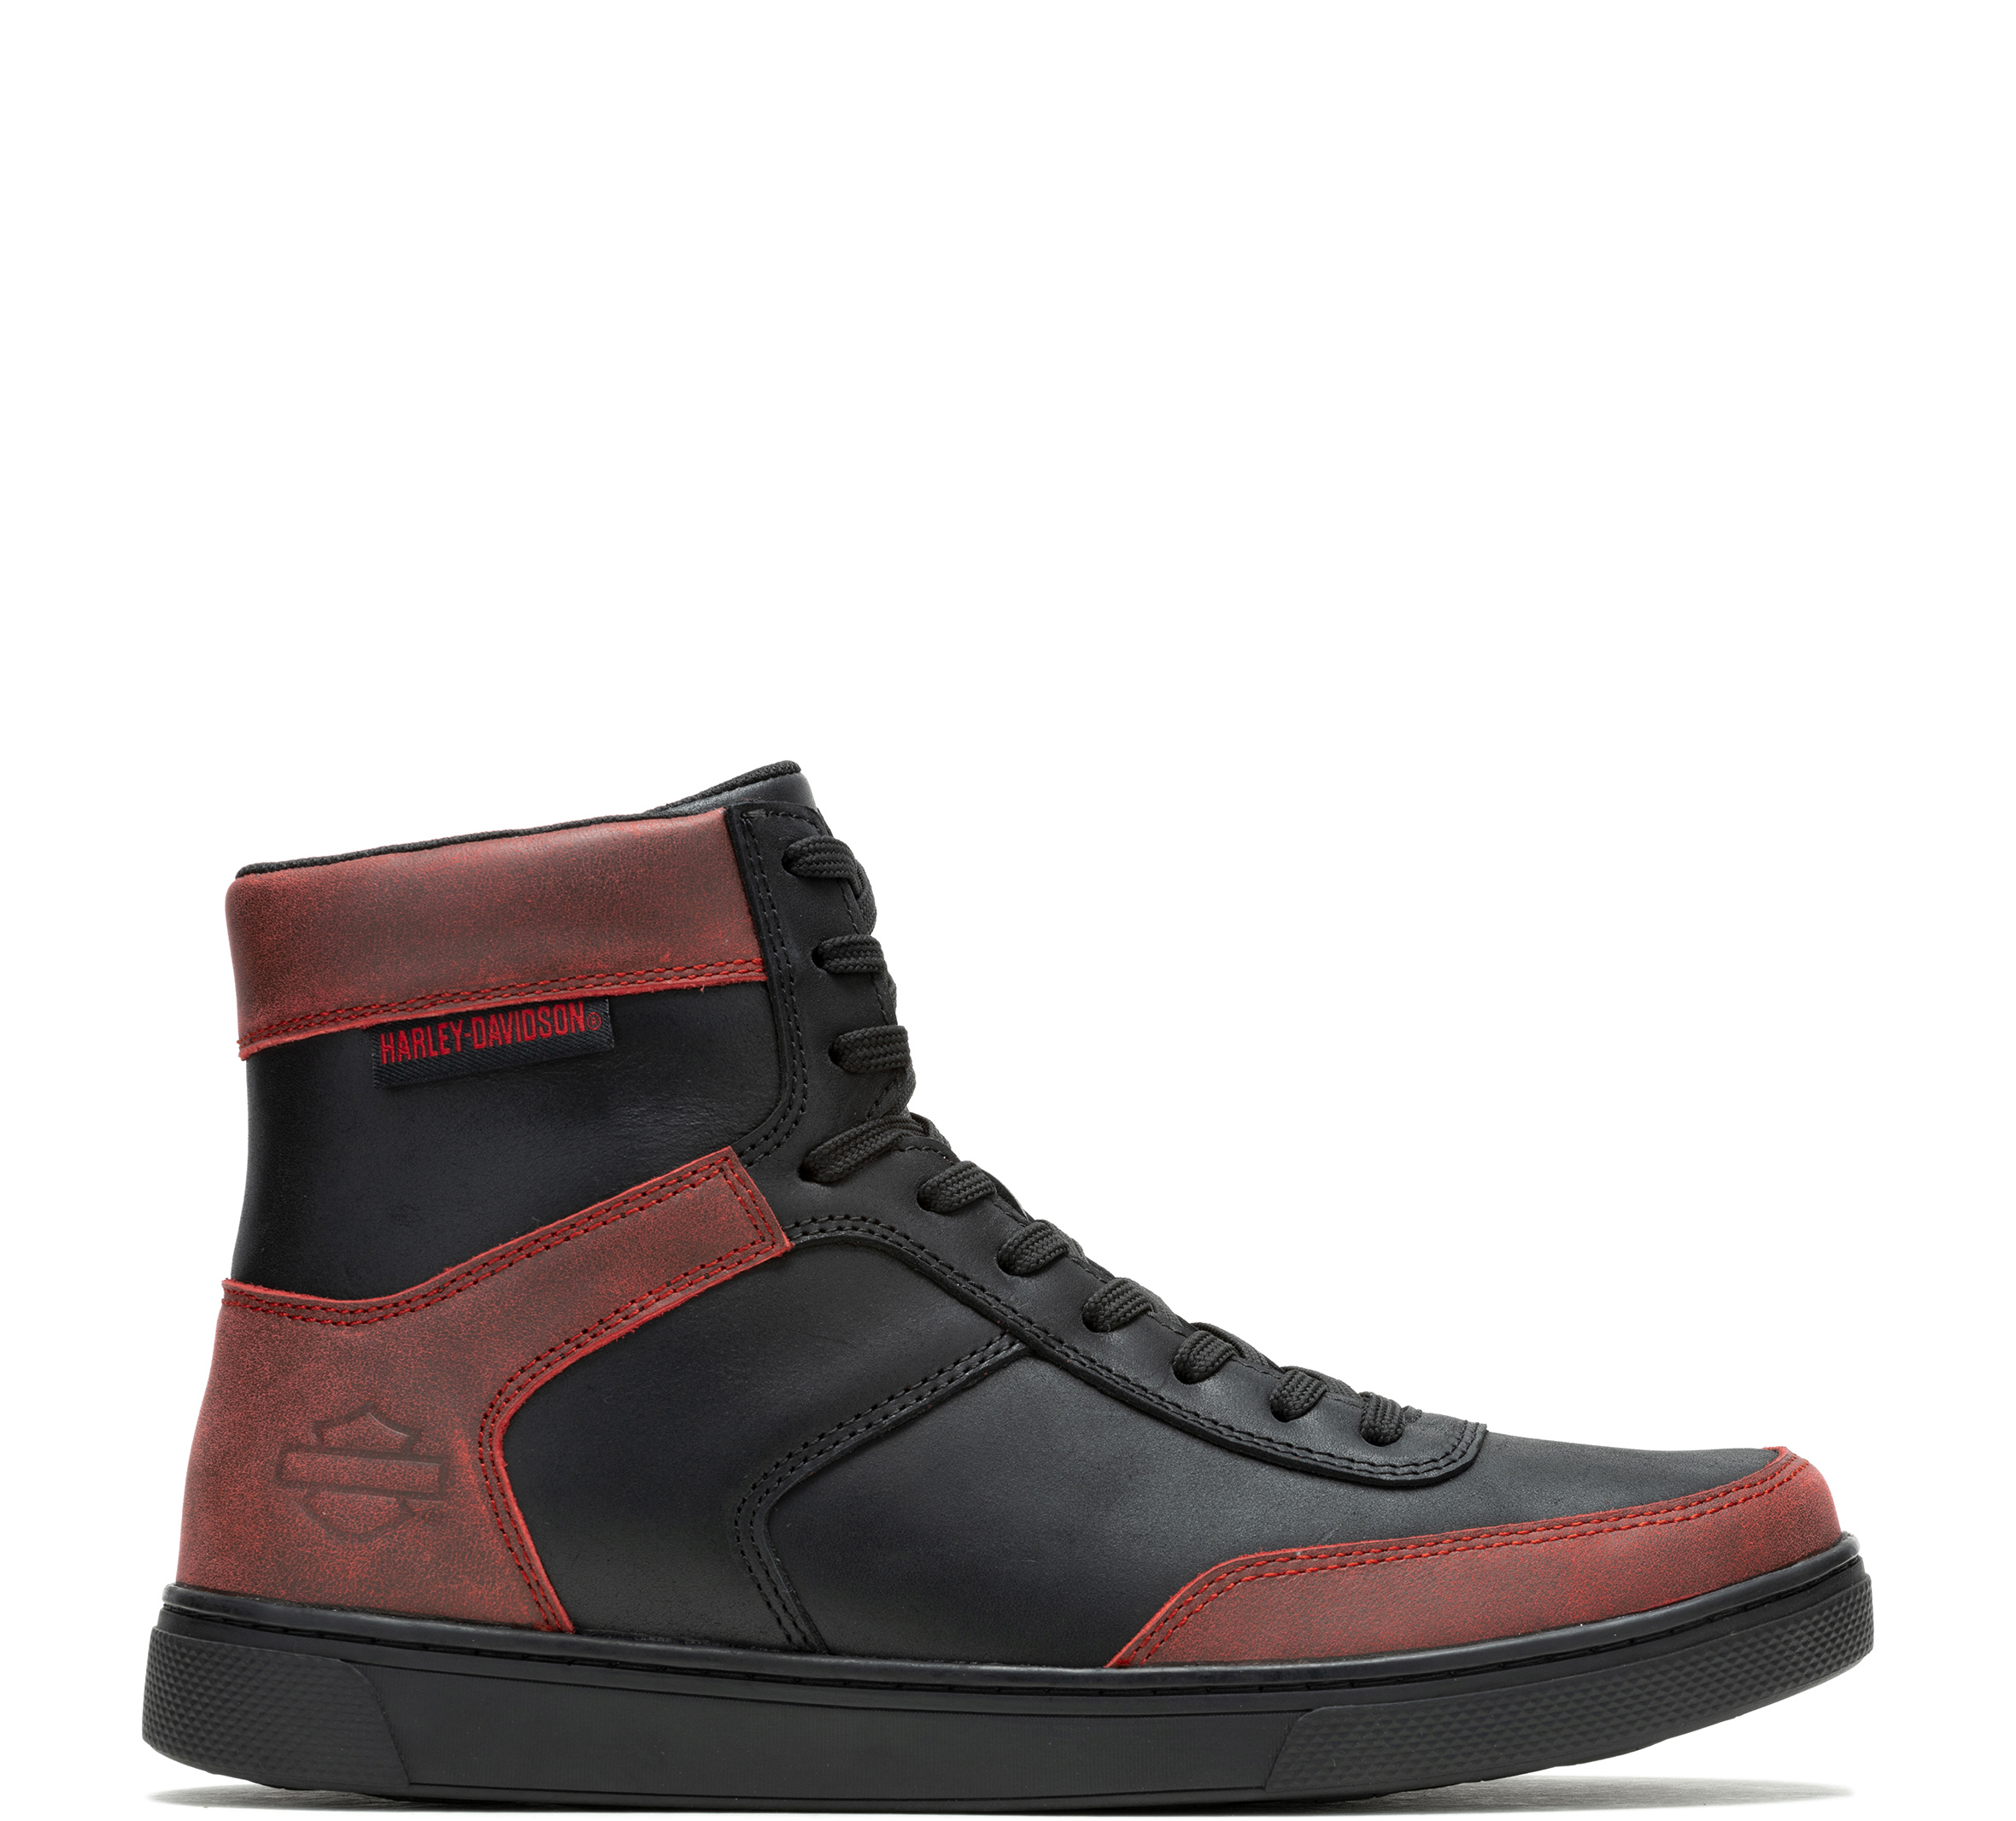 RIVOLI SNEAKER BOOT New  Sneaker boots, Louis vuitton shoes sneakers, Mens  sneakers casual